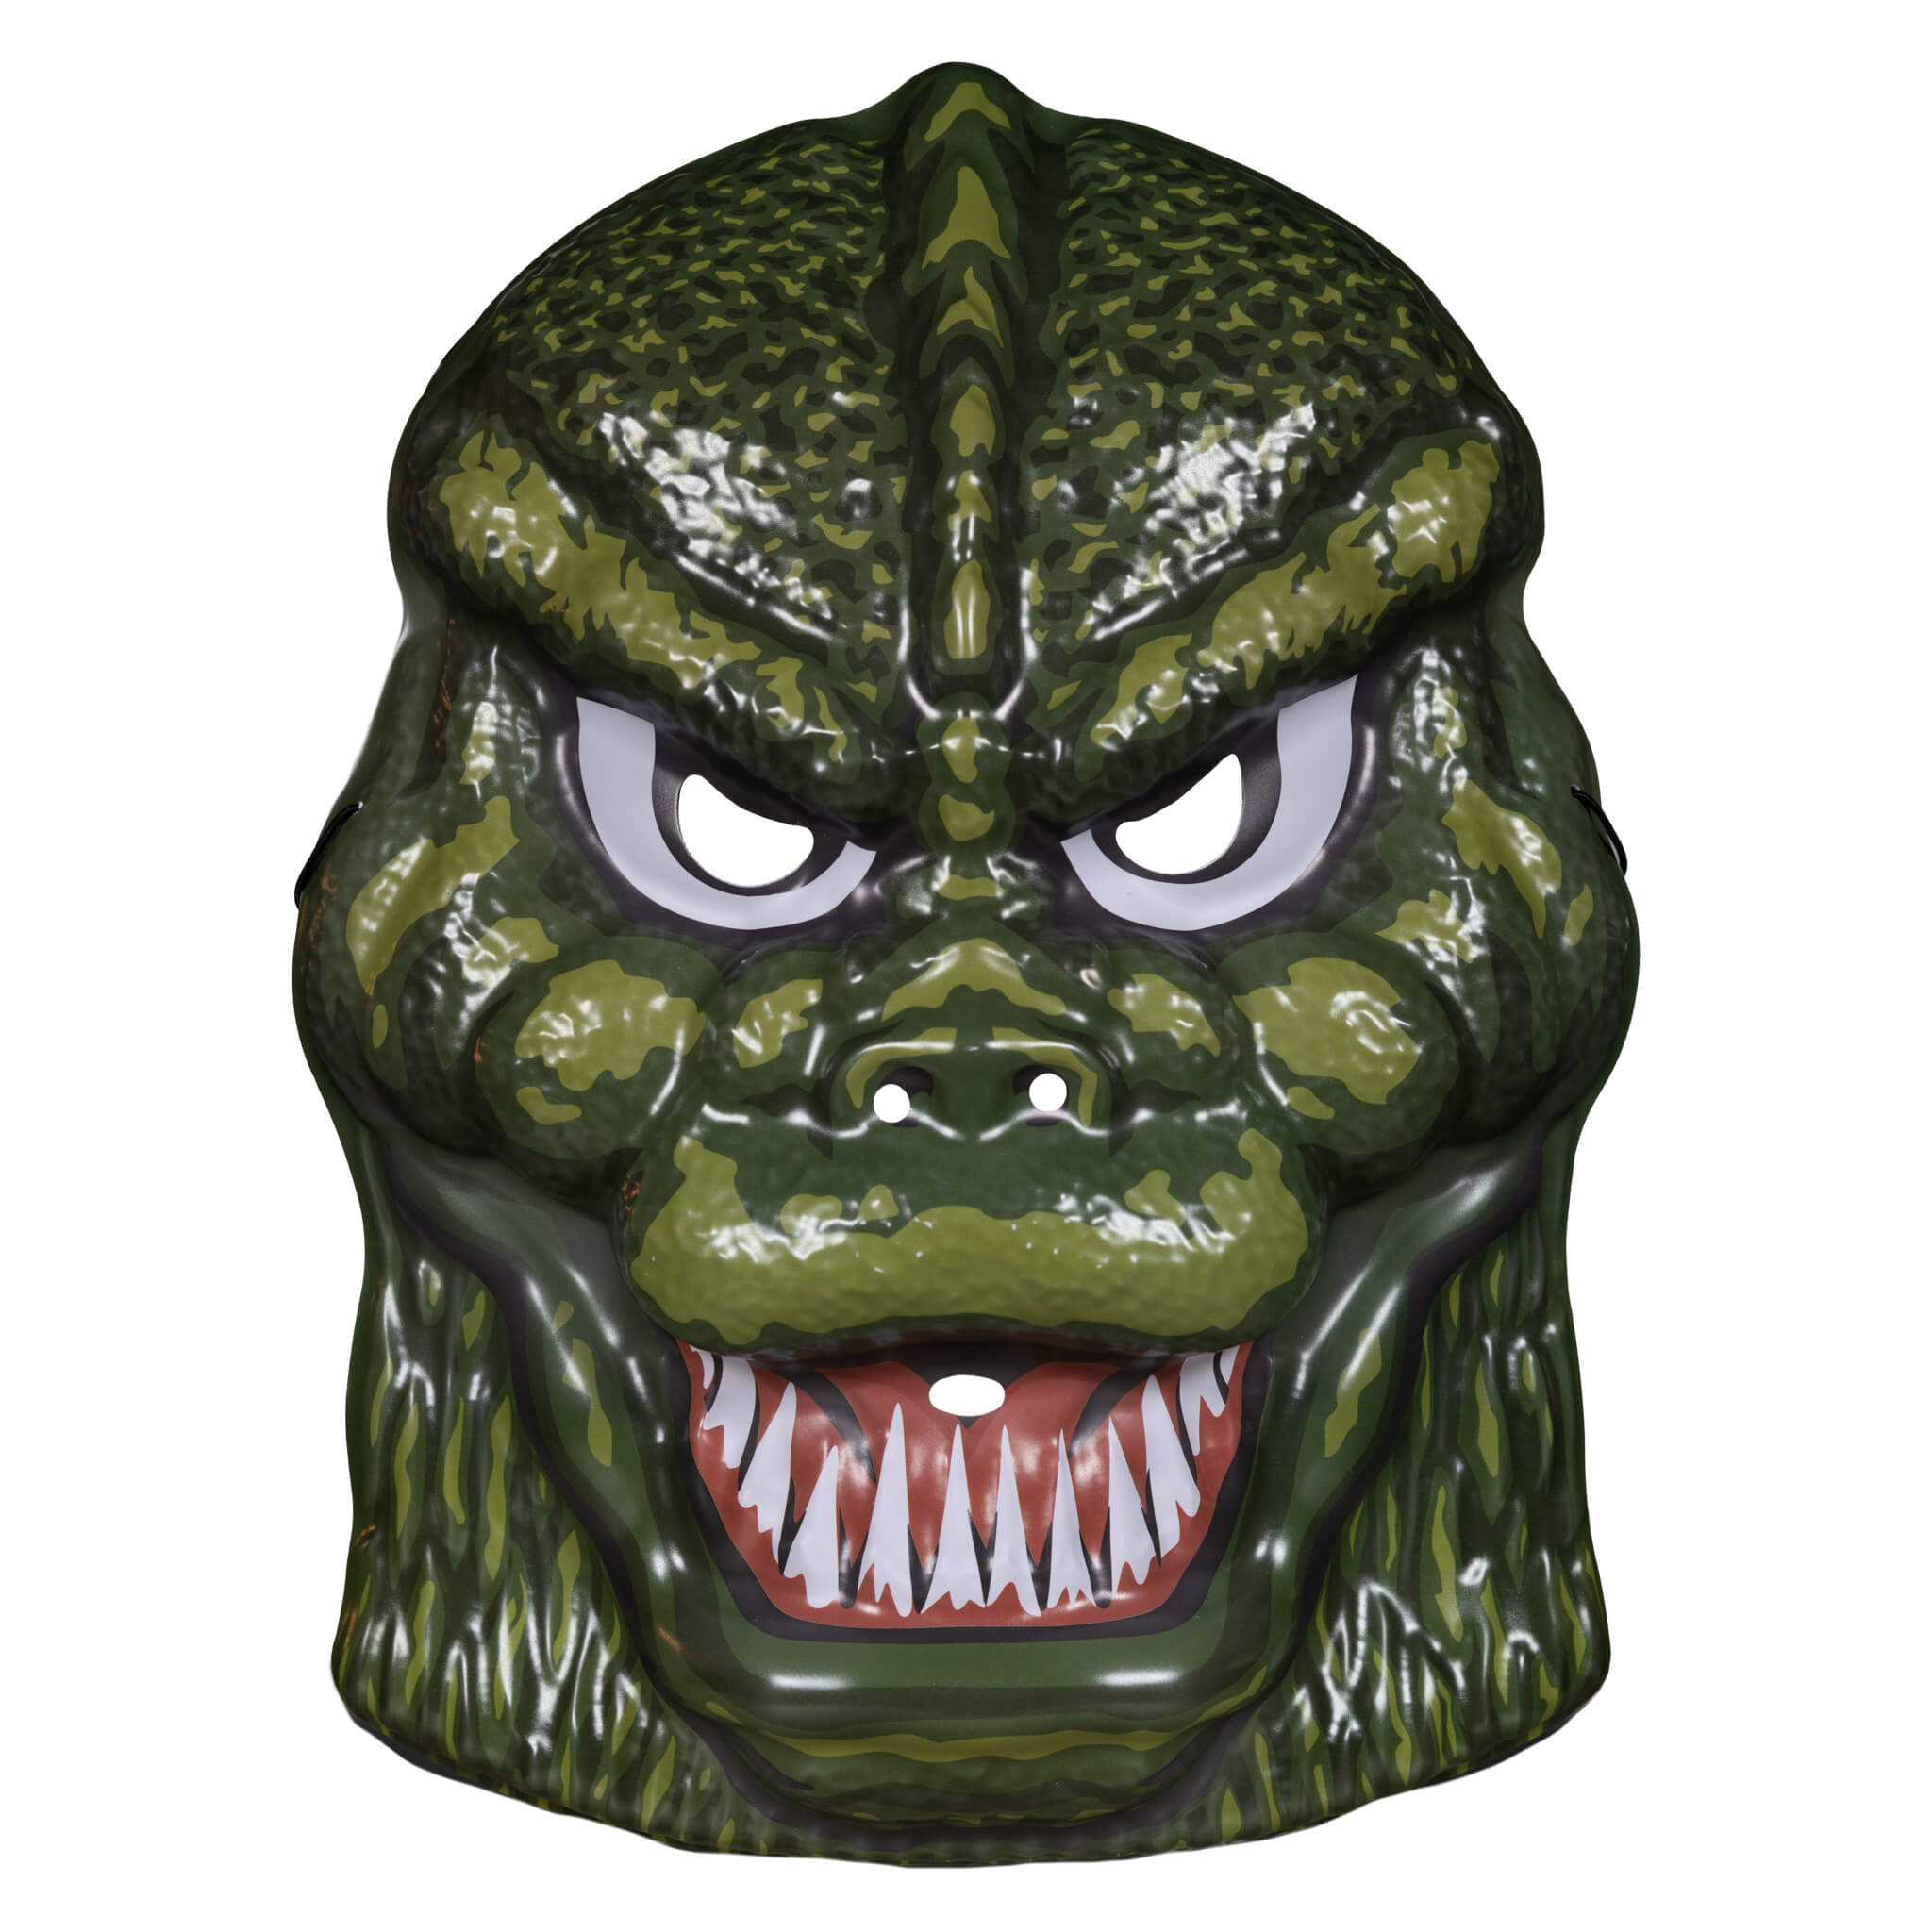 Toho Masks - Godzilla (Green), Mechagodzilla (Grey) & Hedorah (Orange)